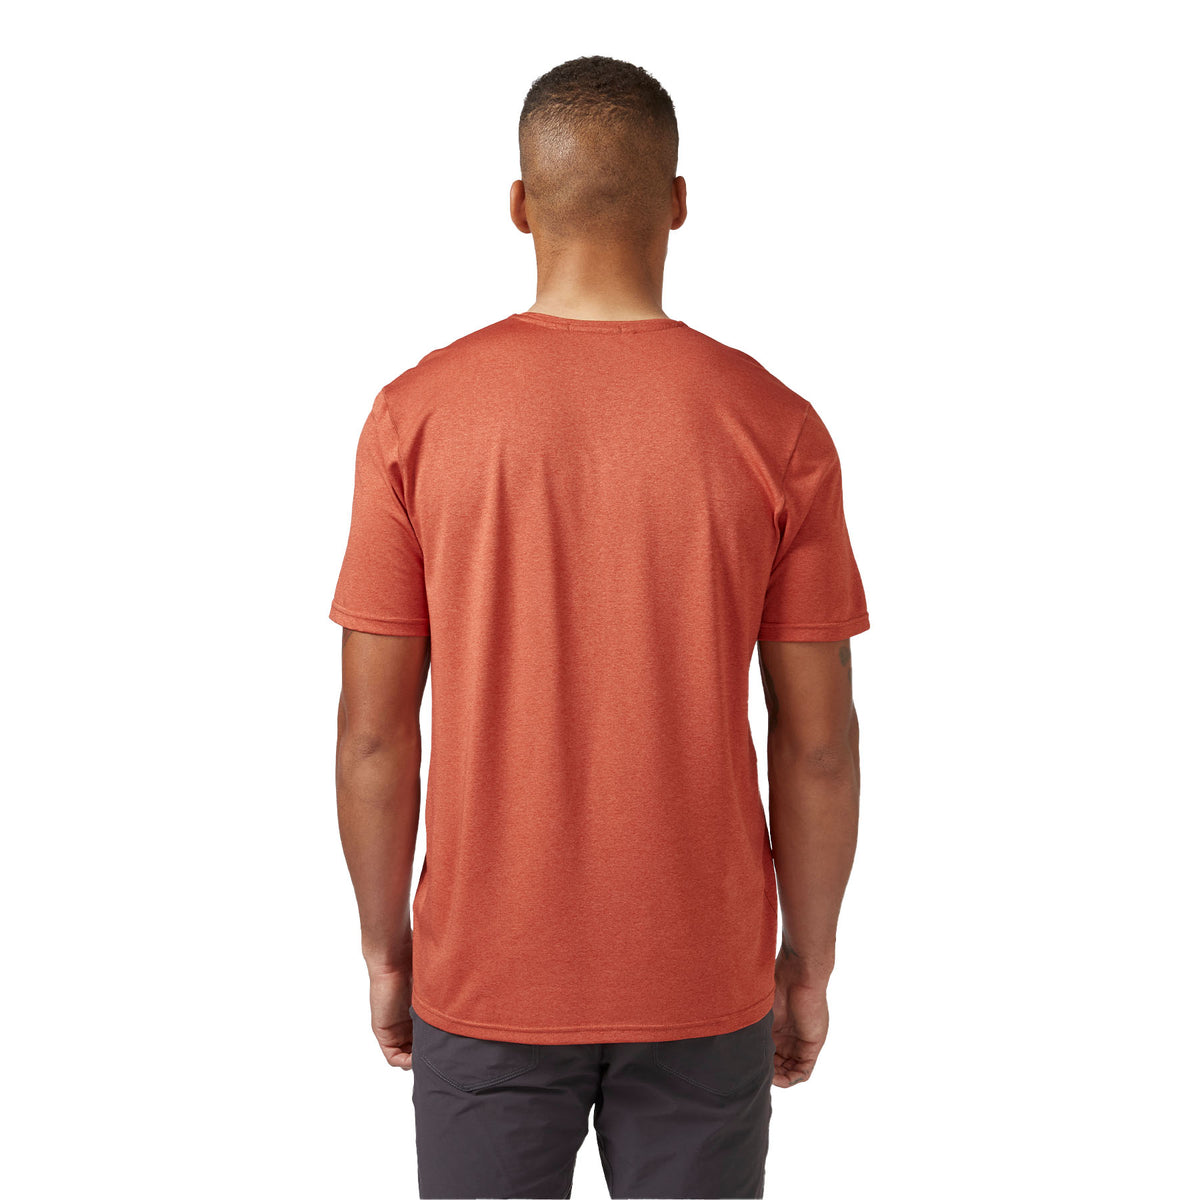 Rab Men's Mantle Mountain Short Sleeve T-shirt 